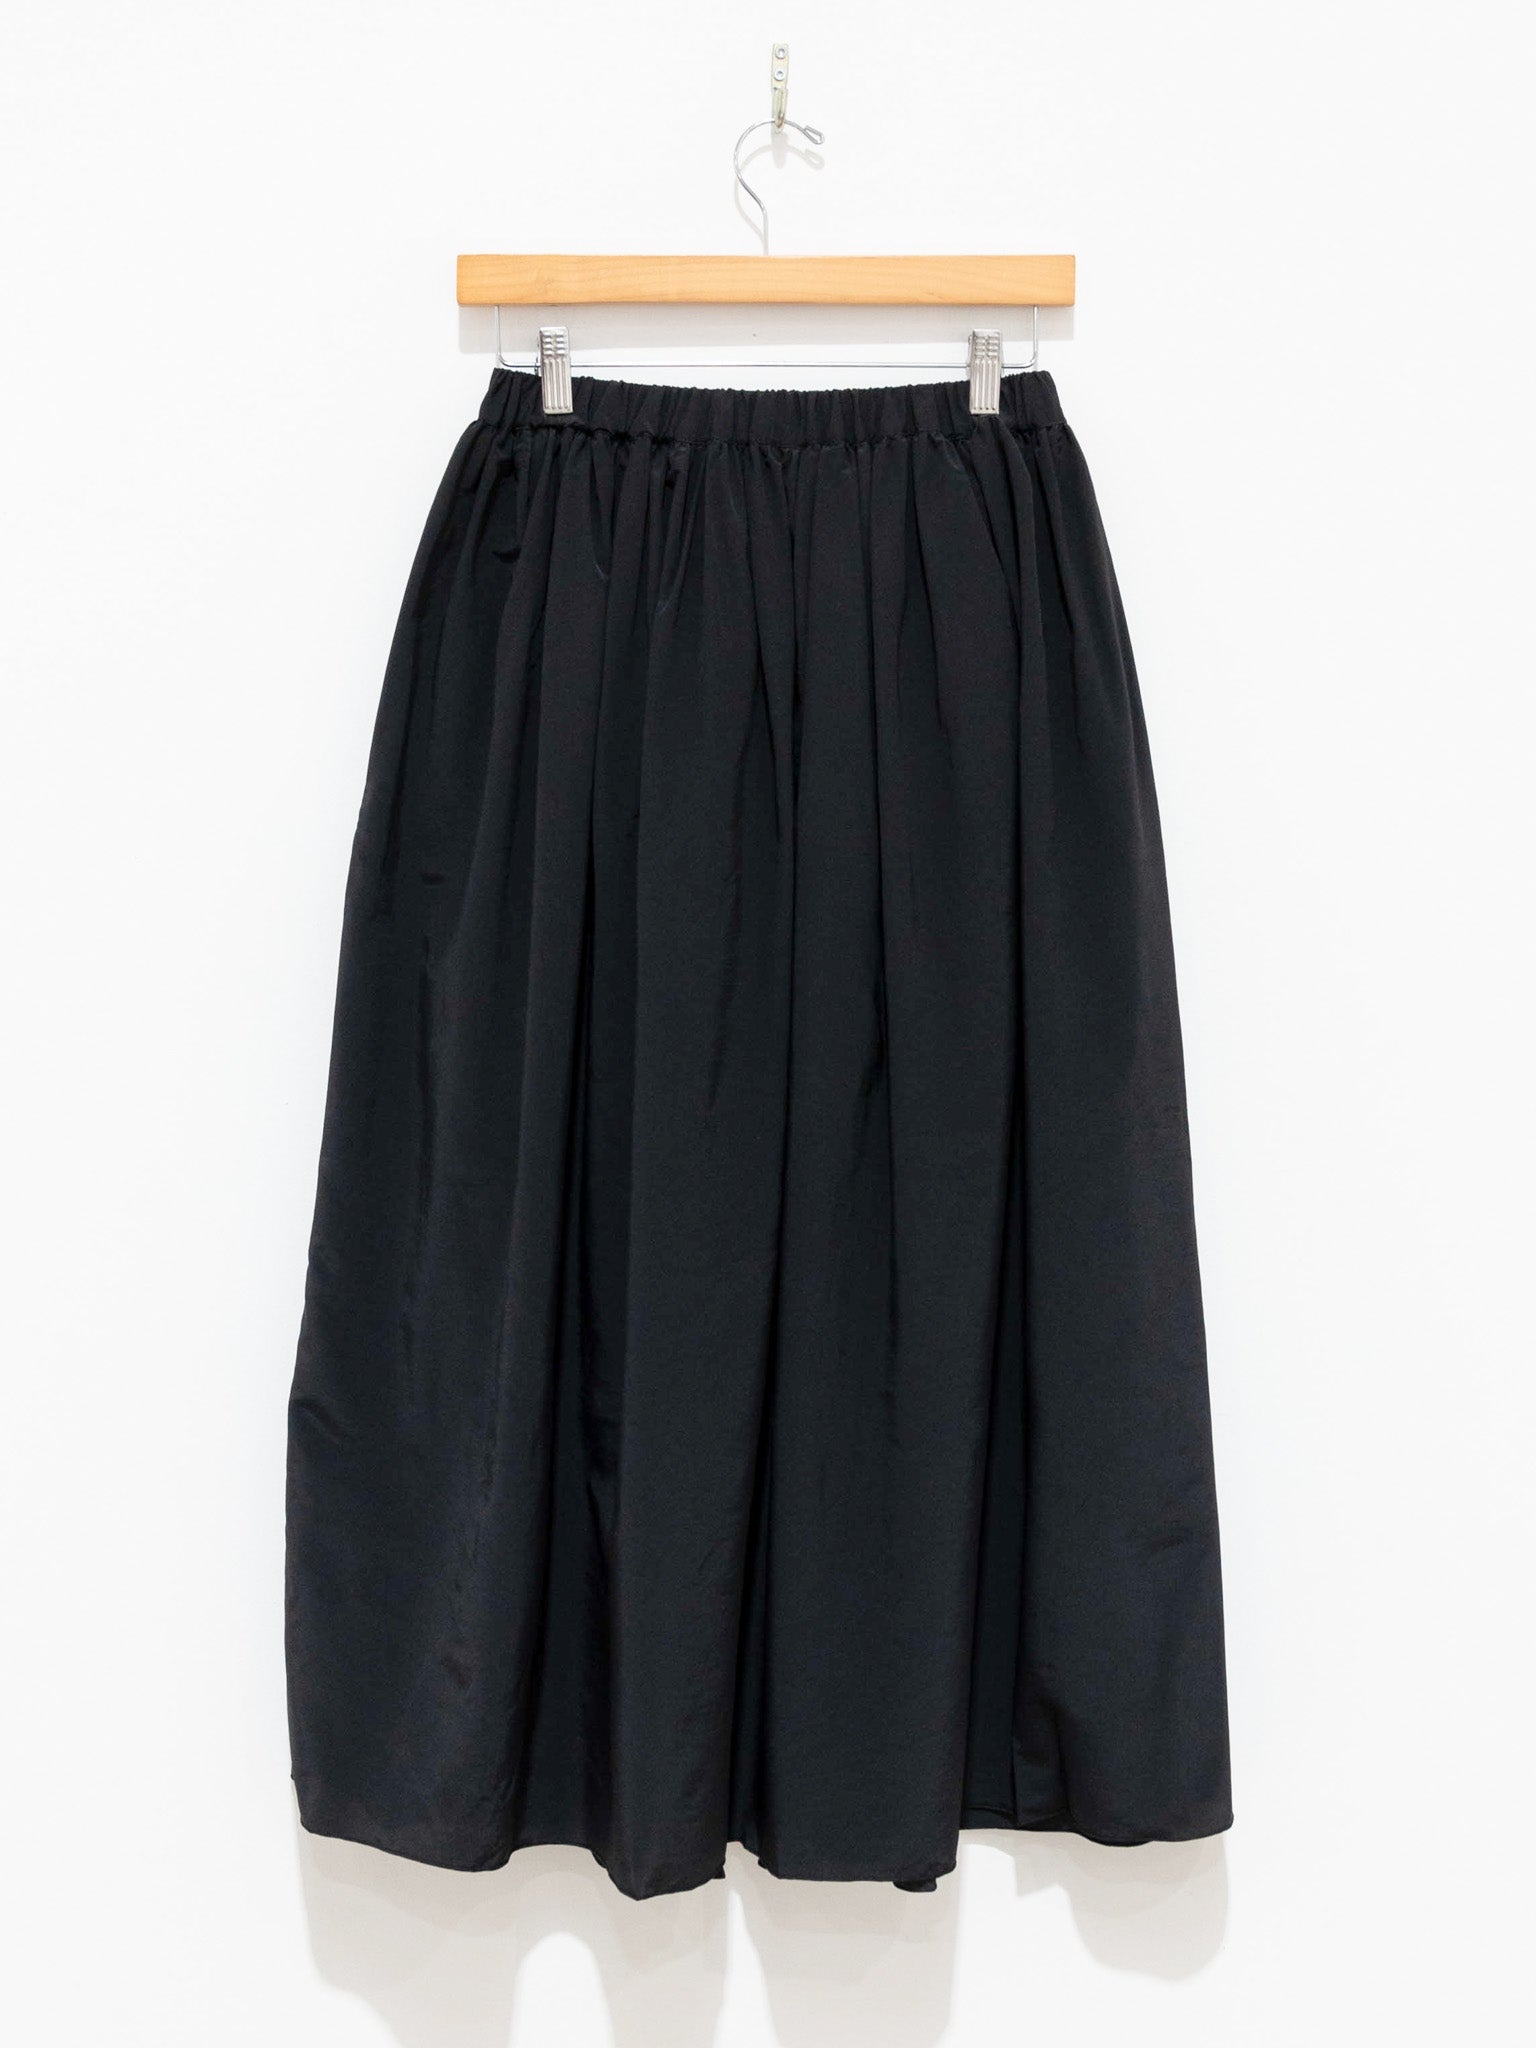 Namu Shop - Sara Lanzi Gathered Skirt - Black